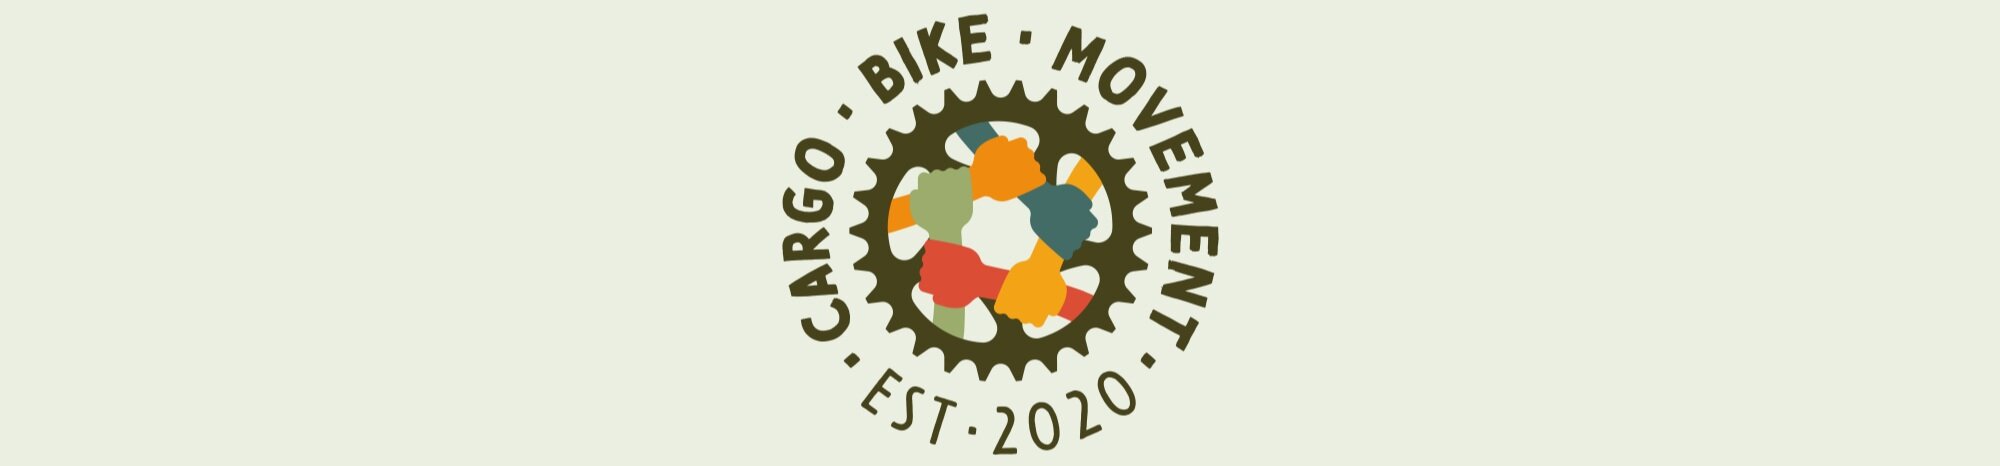 Cargo Bike Movement logo